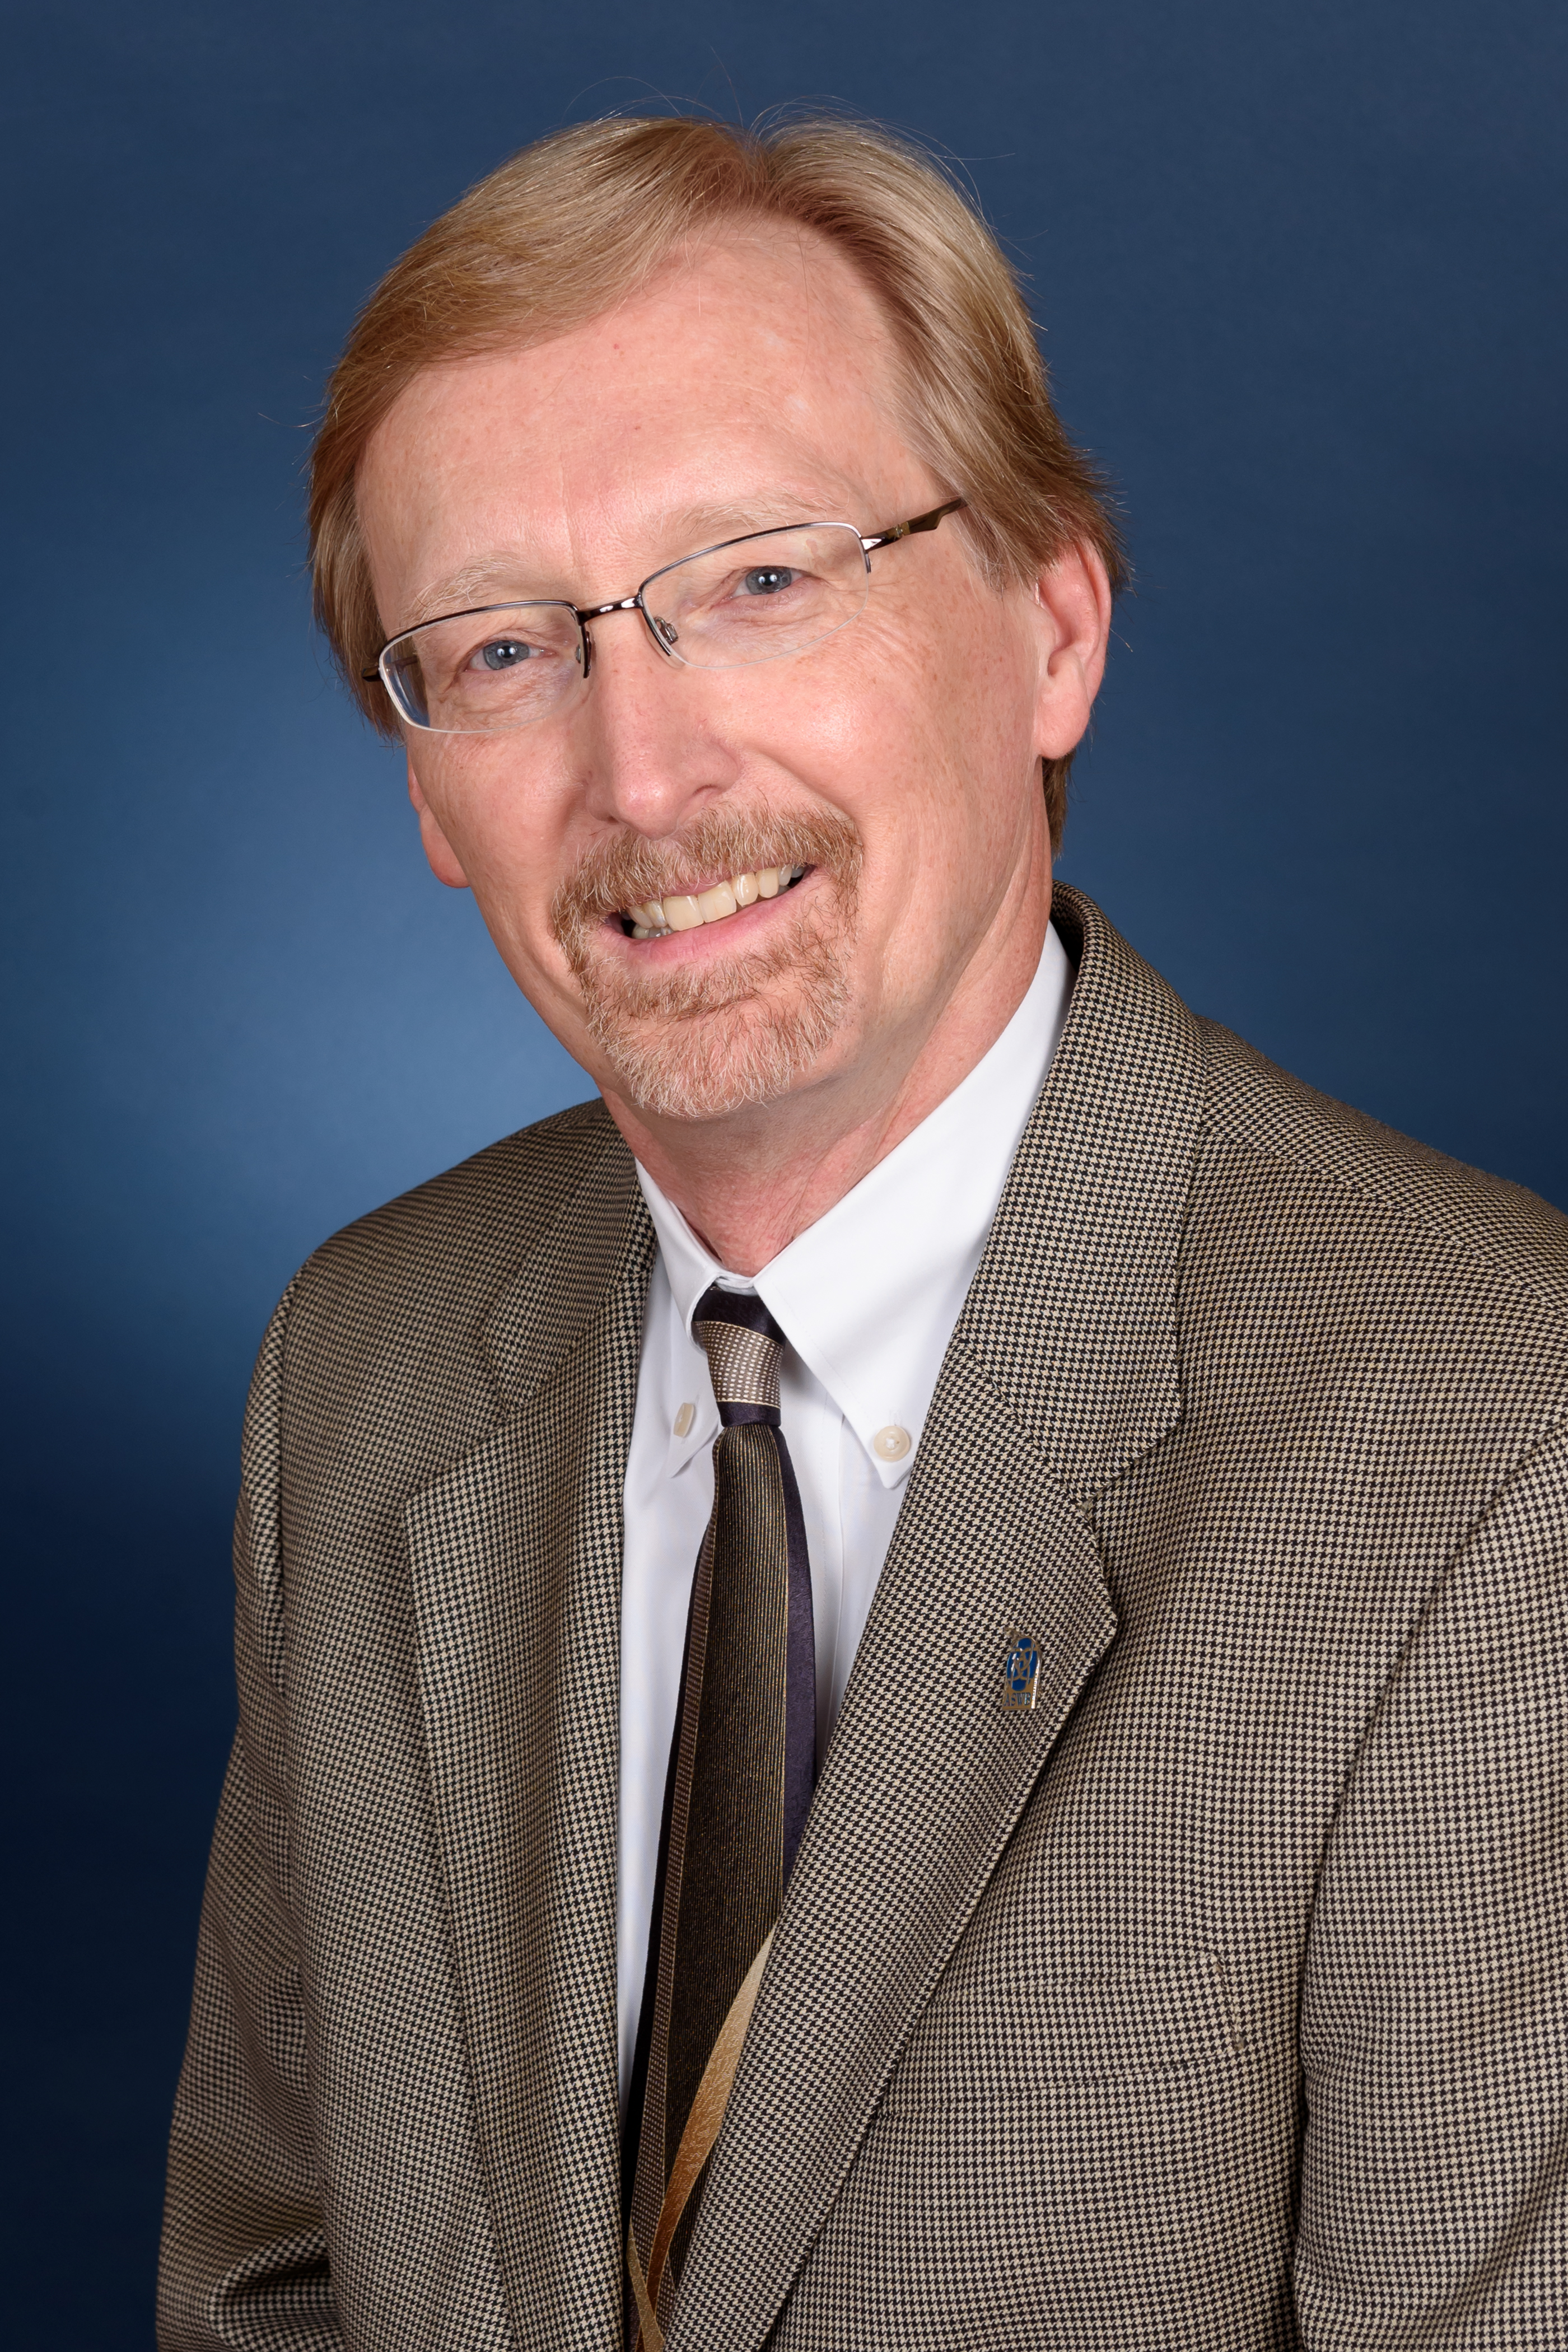 Dwight J. Hymans, MSW, LCSW